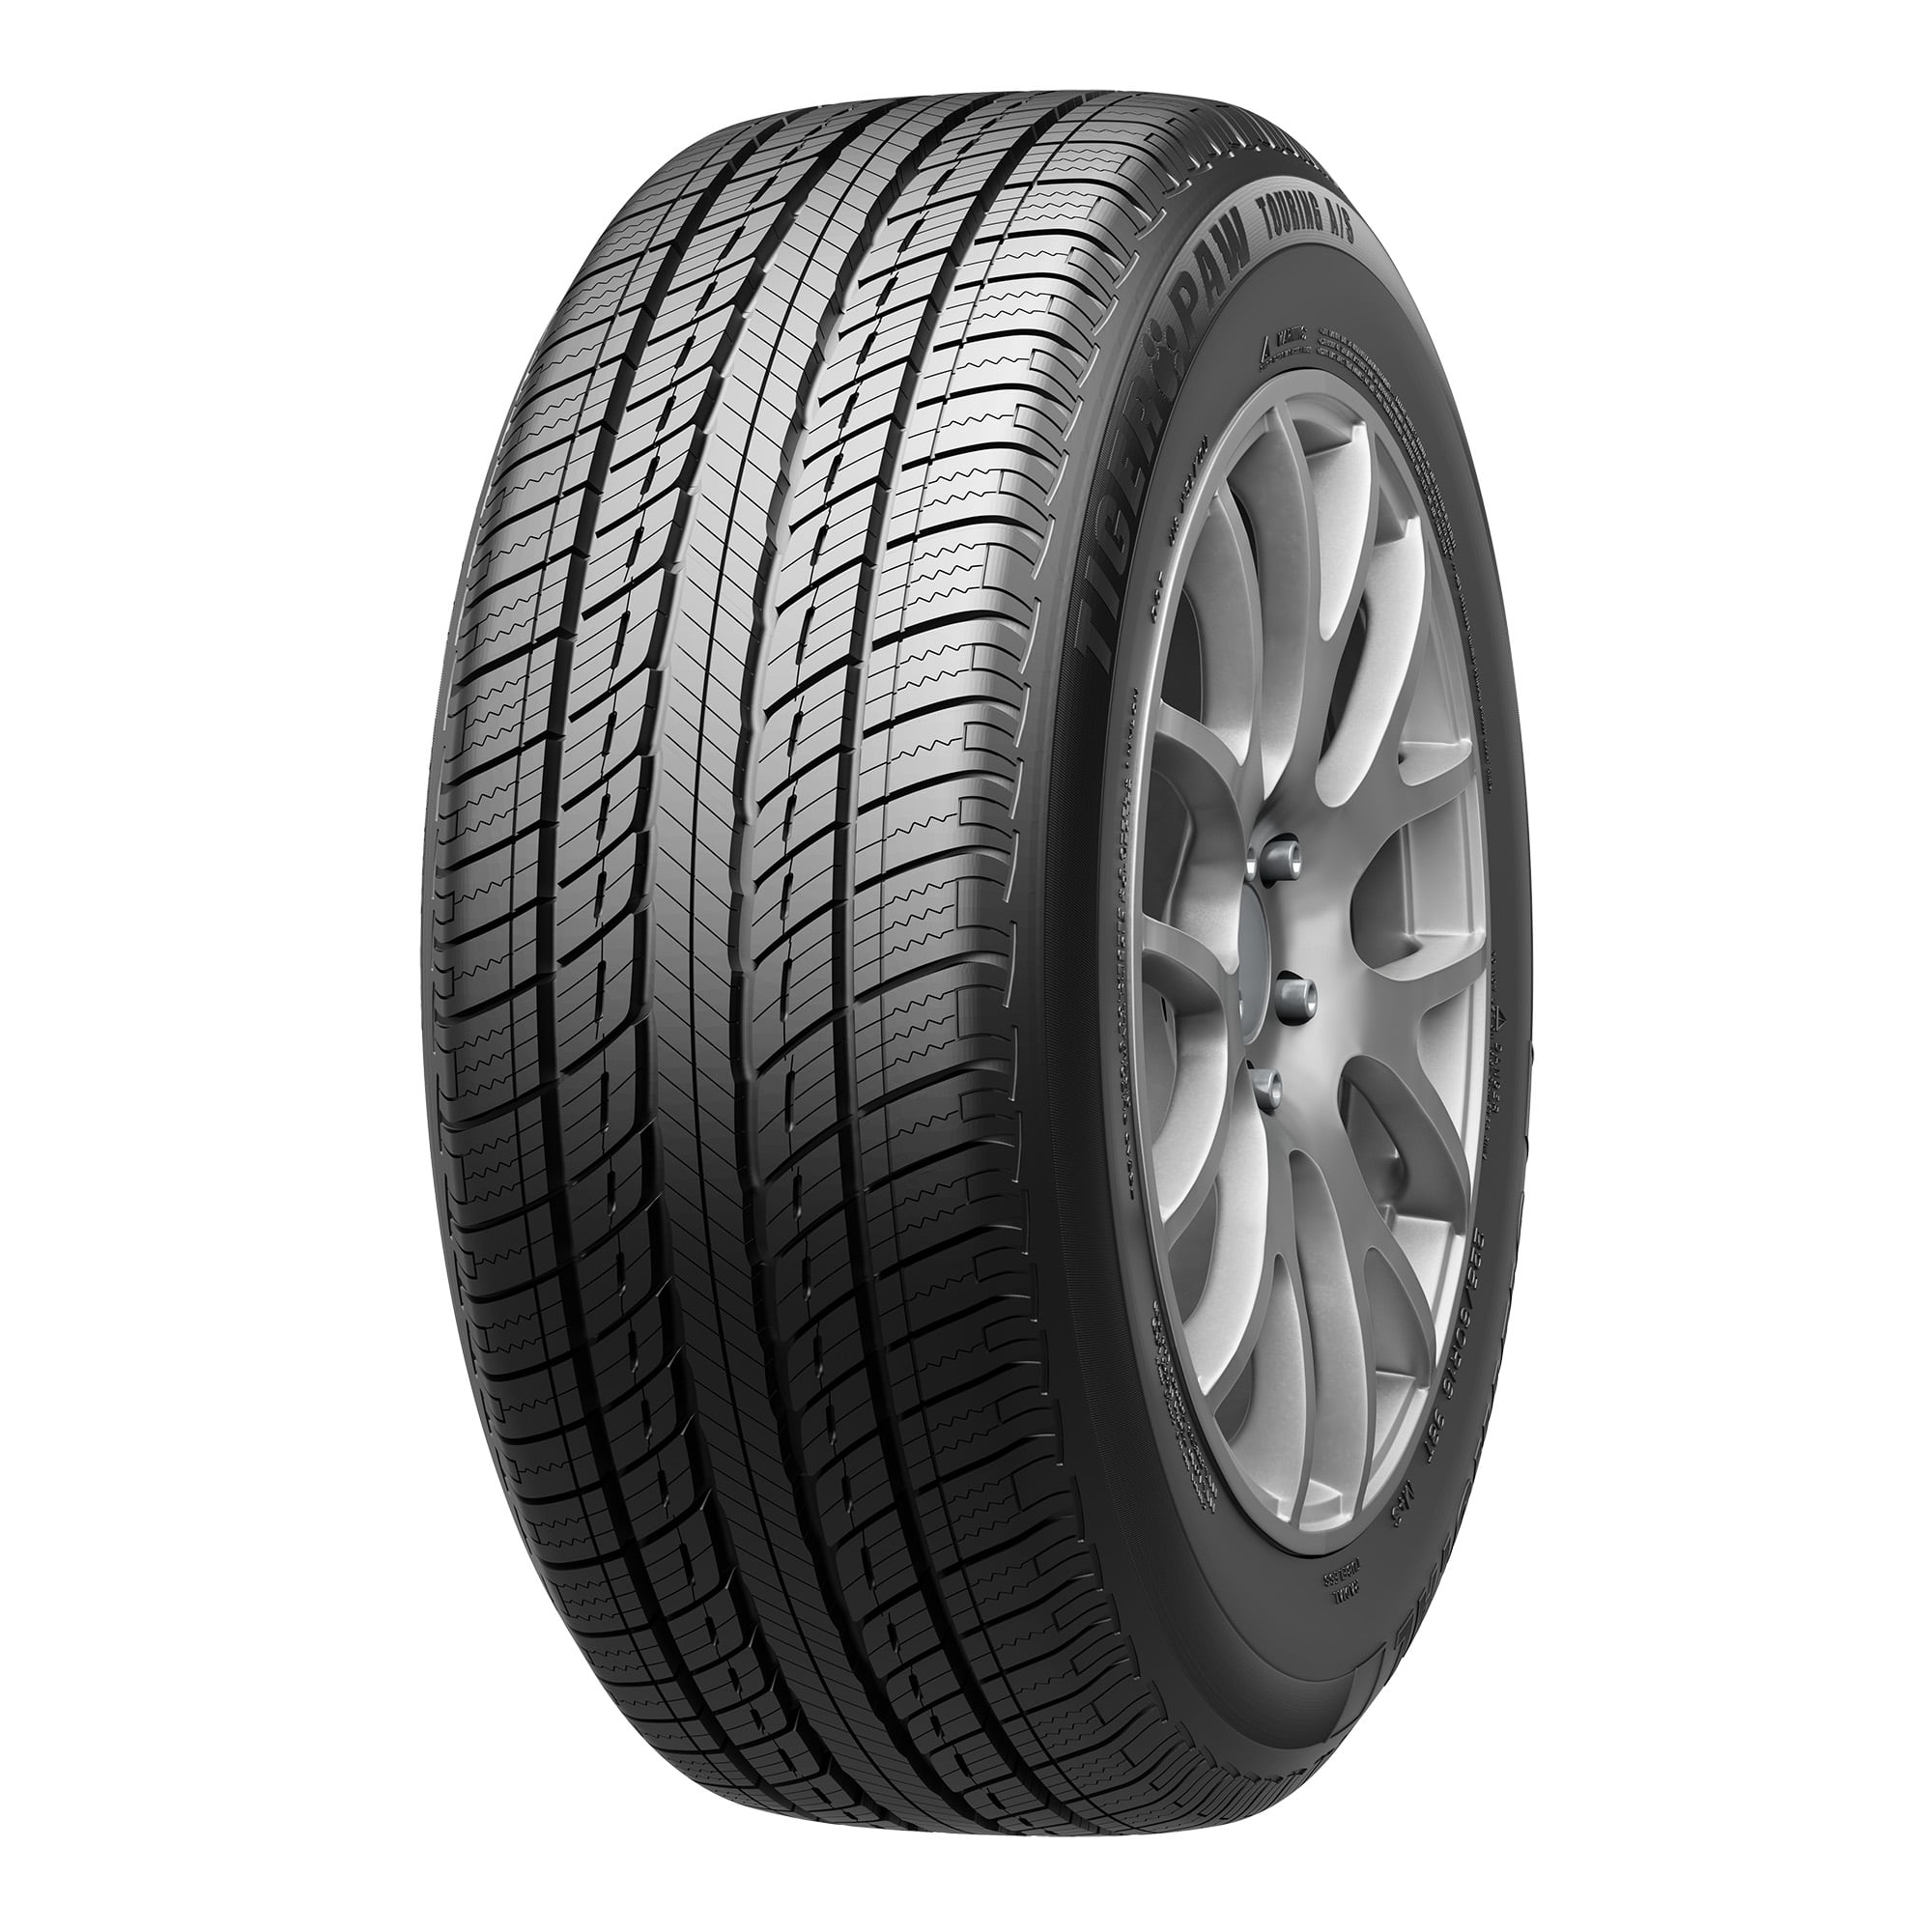 GT Radial Champiro UHPAS 205/55R16 91V All Season Radial Tire 